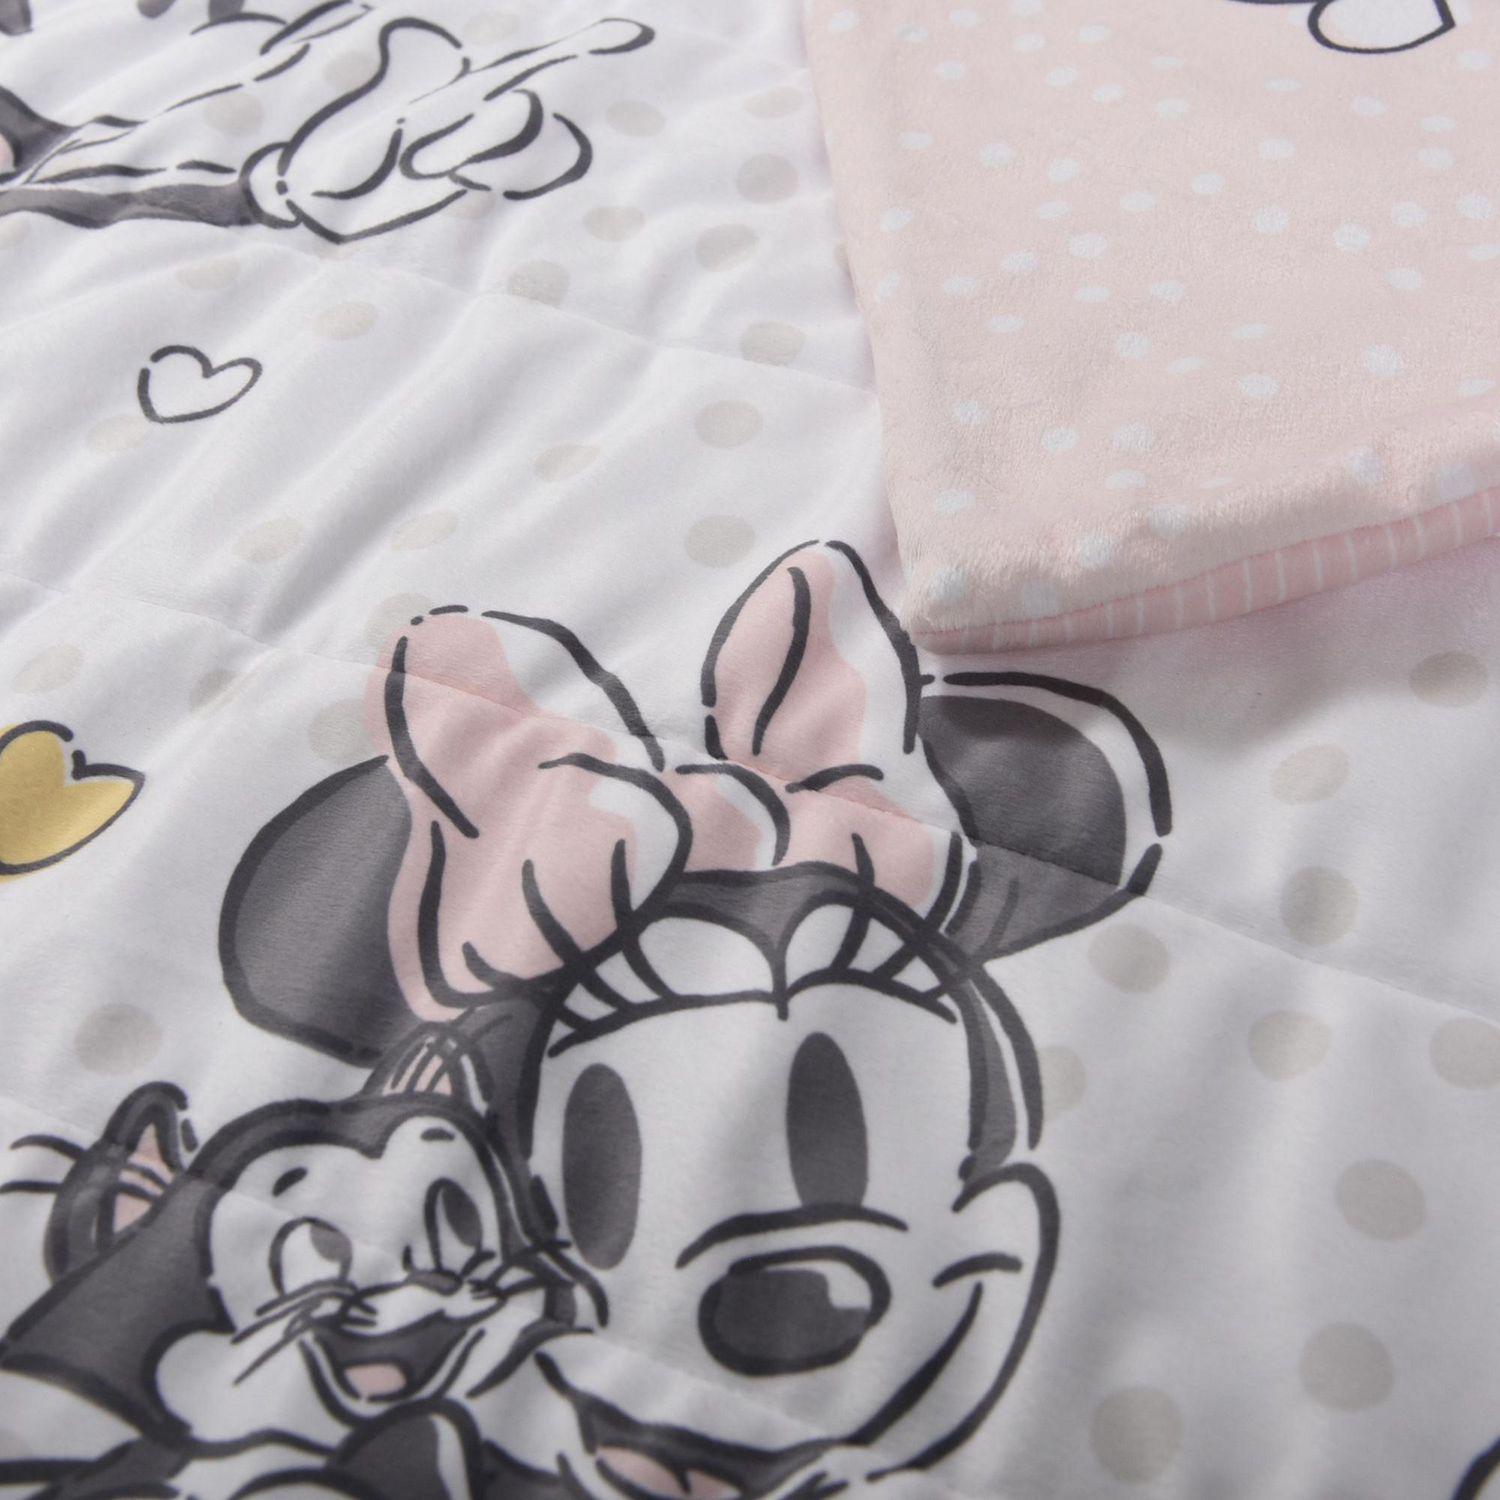 Disney Minnie Mouse 5-Piece Crib Bedding Set, Day Dreaming